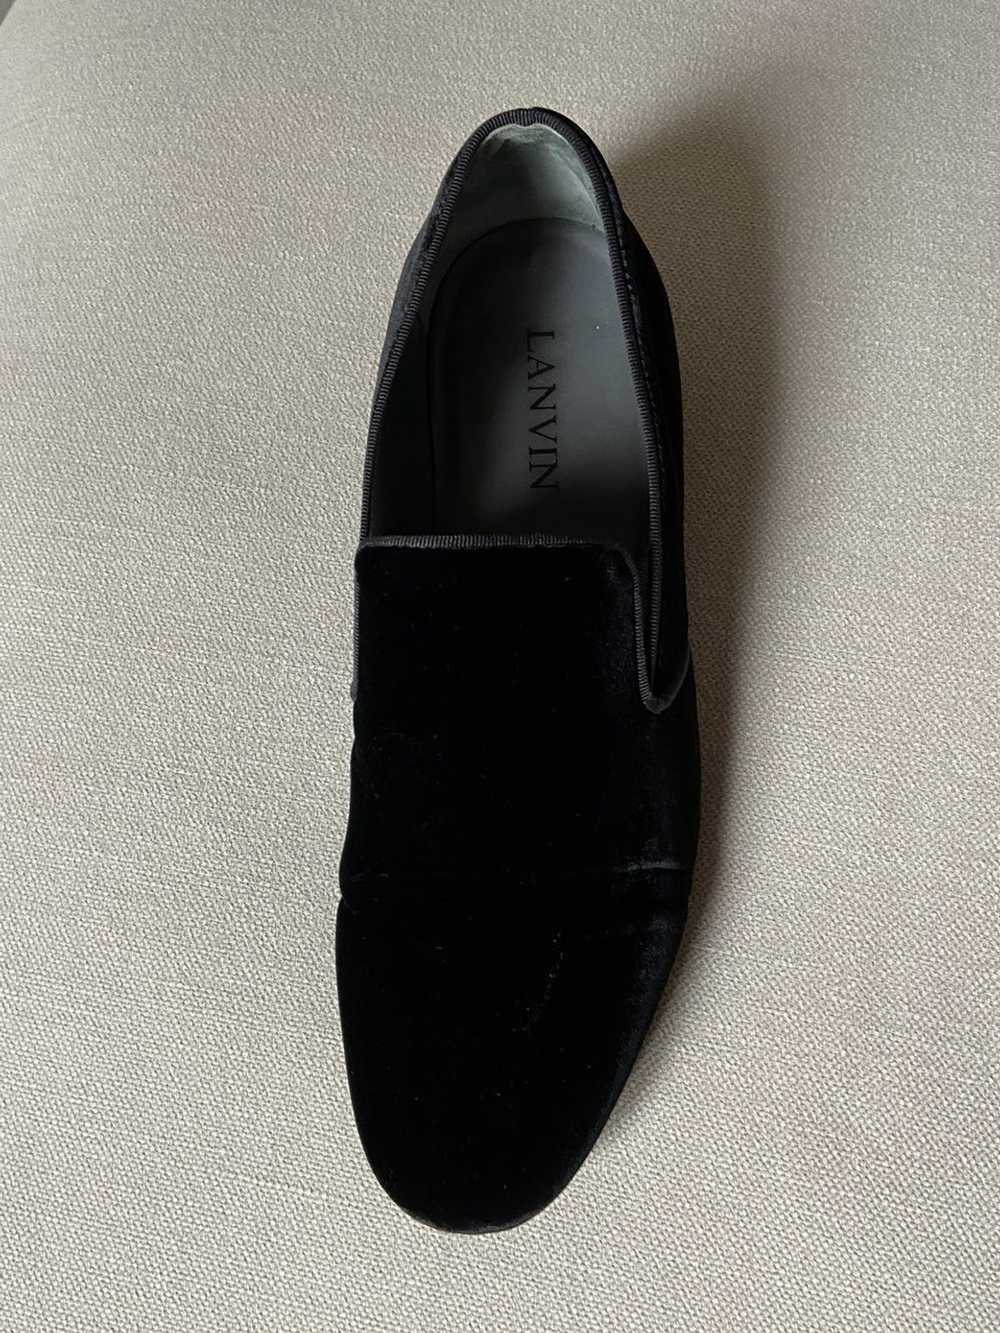 Lanvin Lanvin velvet black formal shoes - image 2